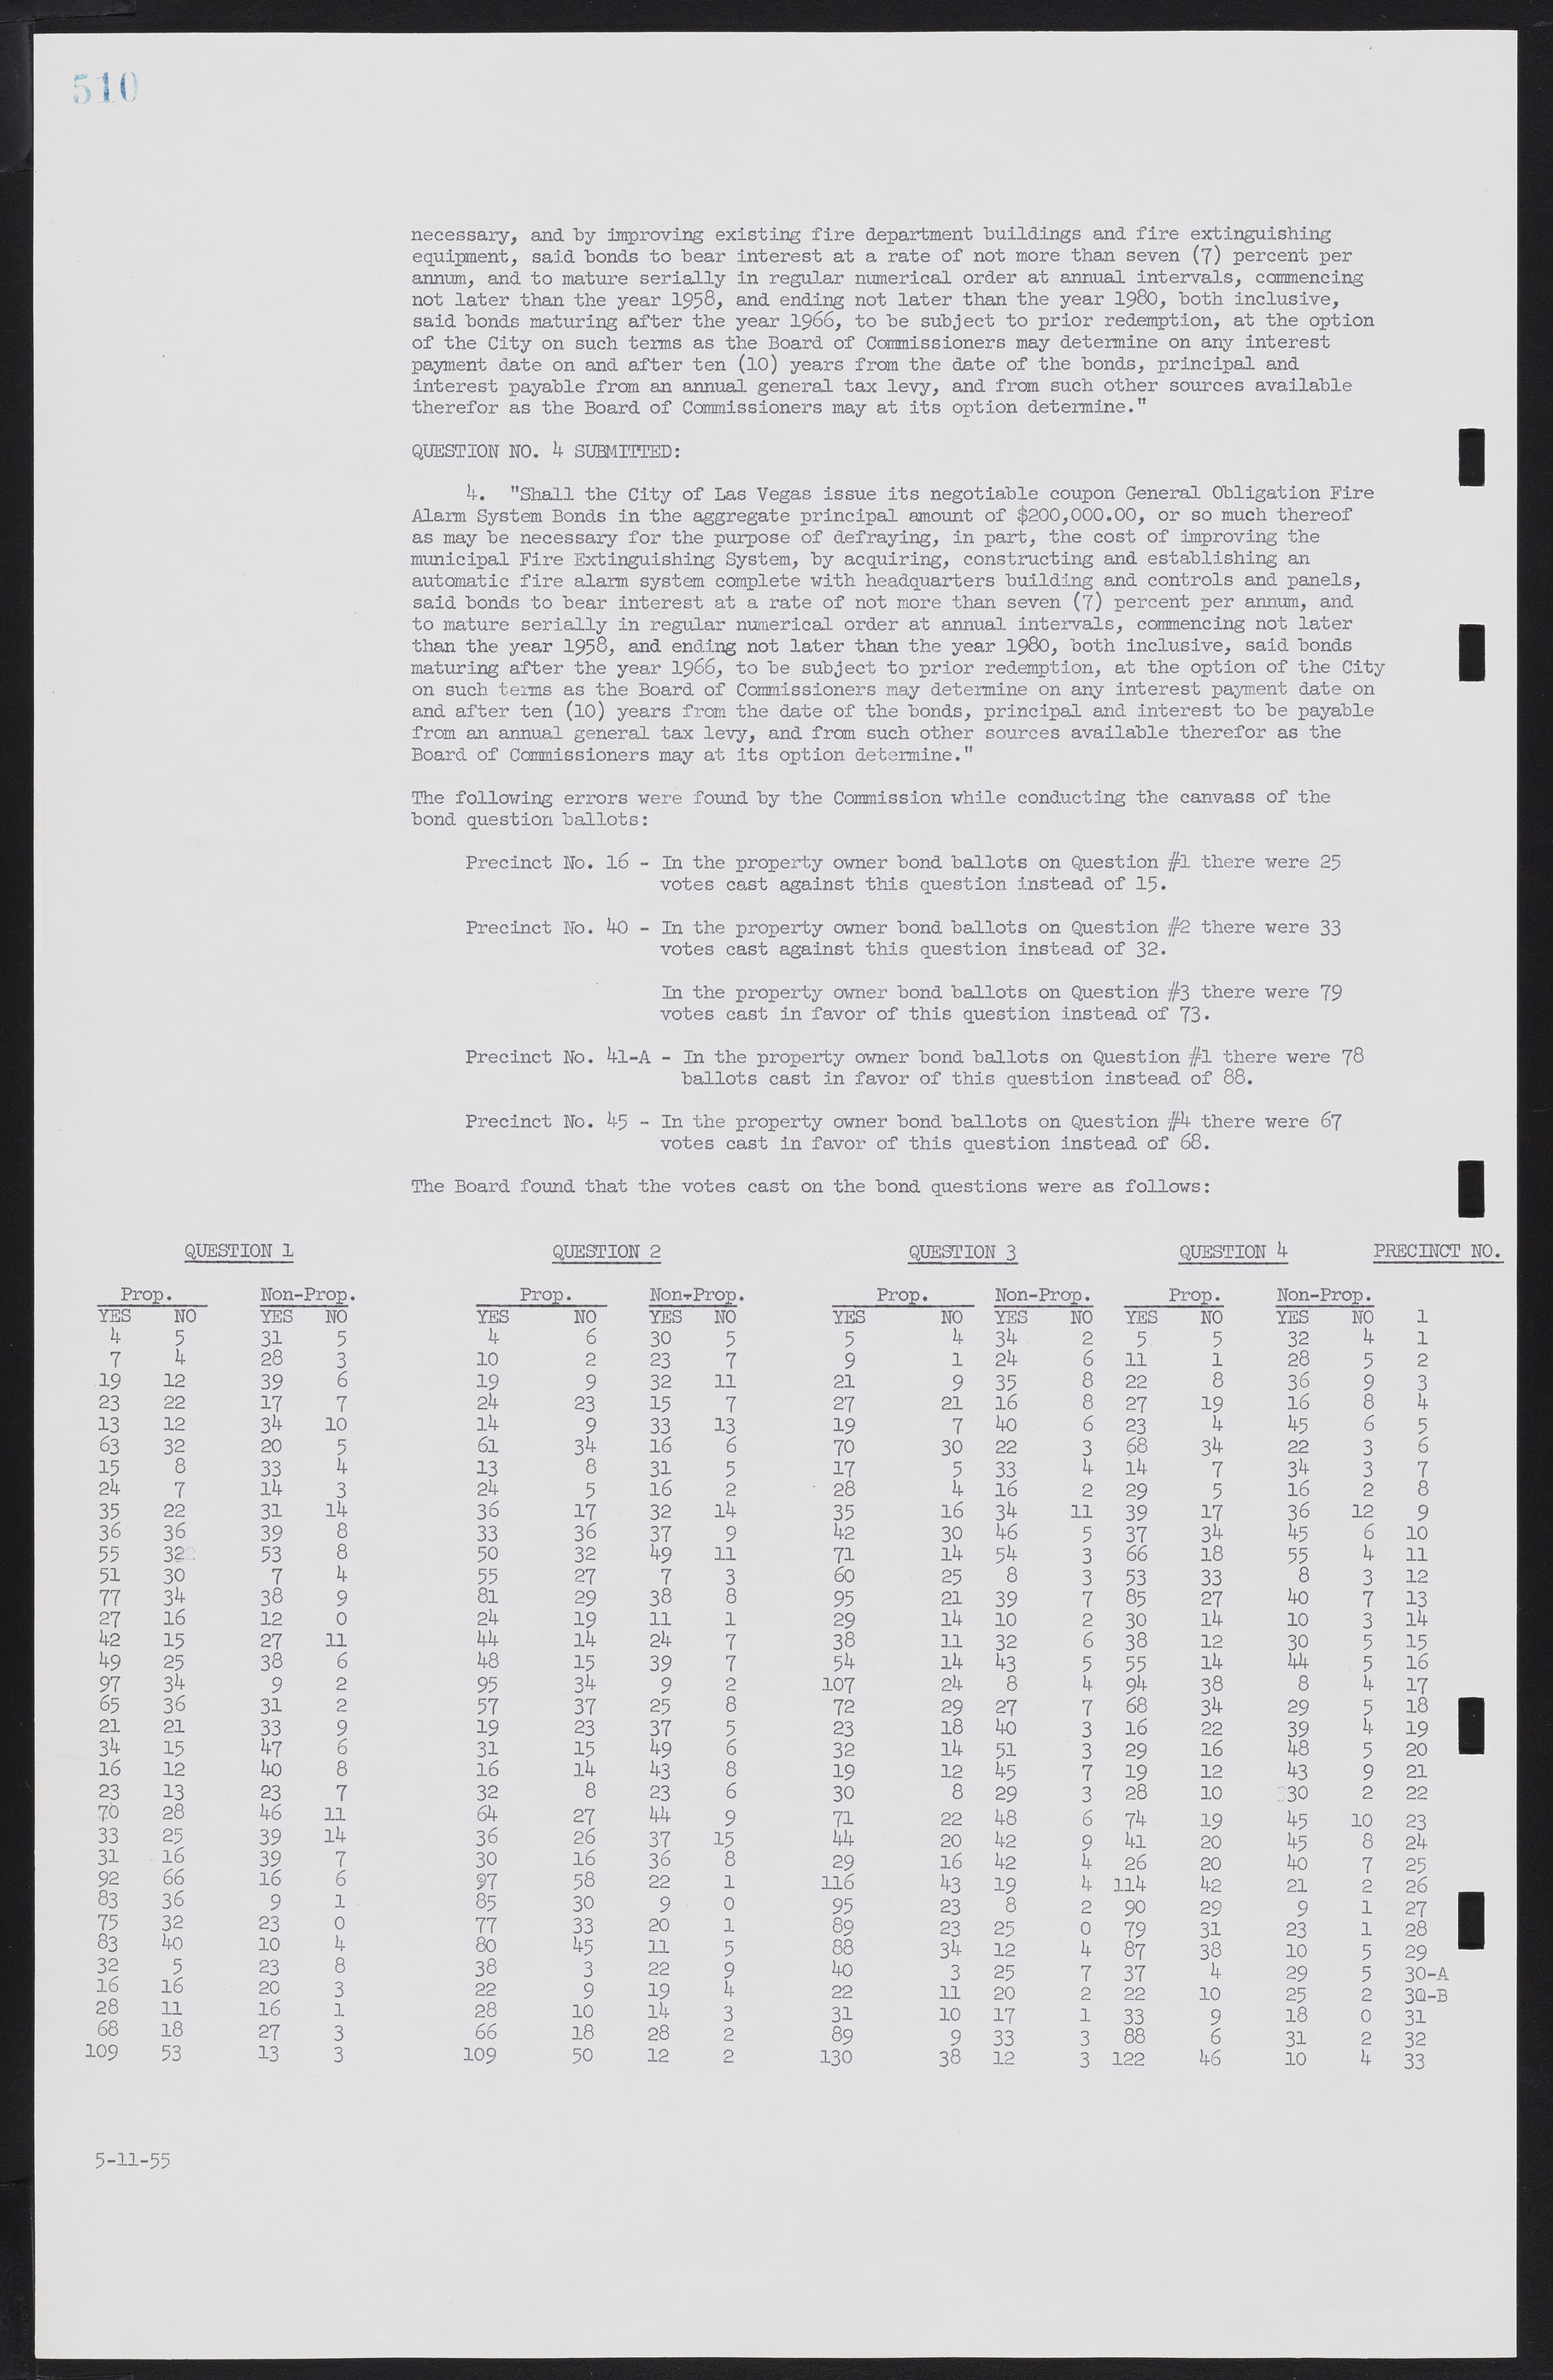 Las Vegas City Commission Minutes, February 17, 1954 to September 21, 1955, lvc000009-516